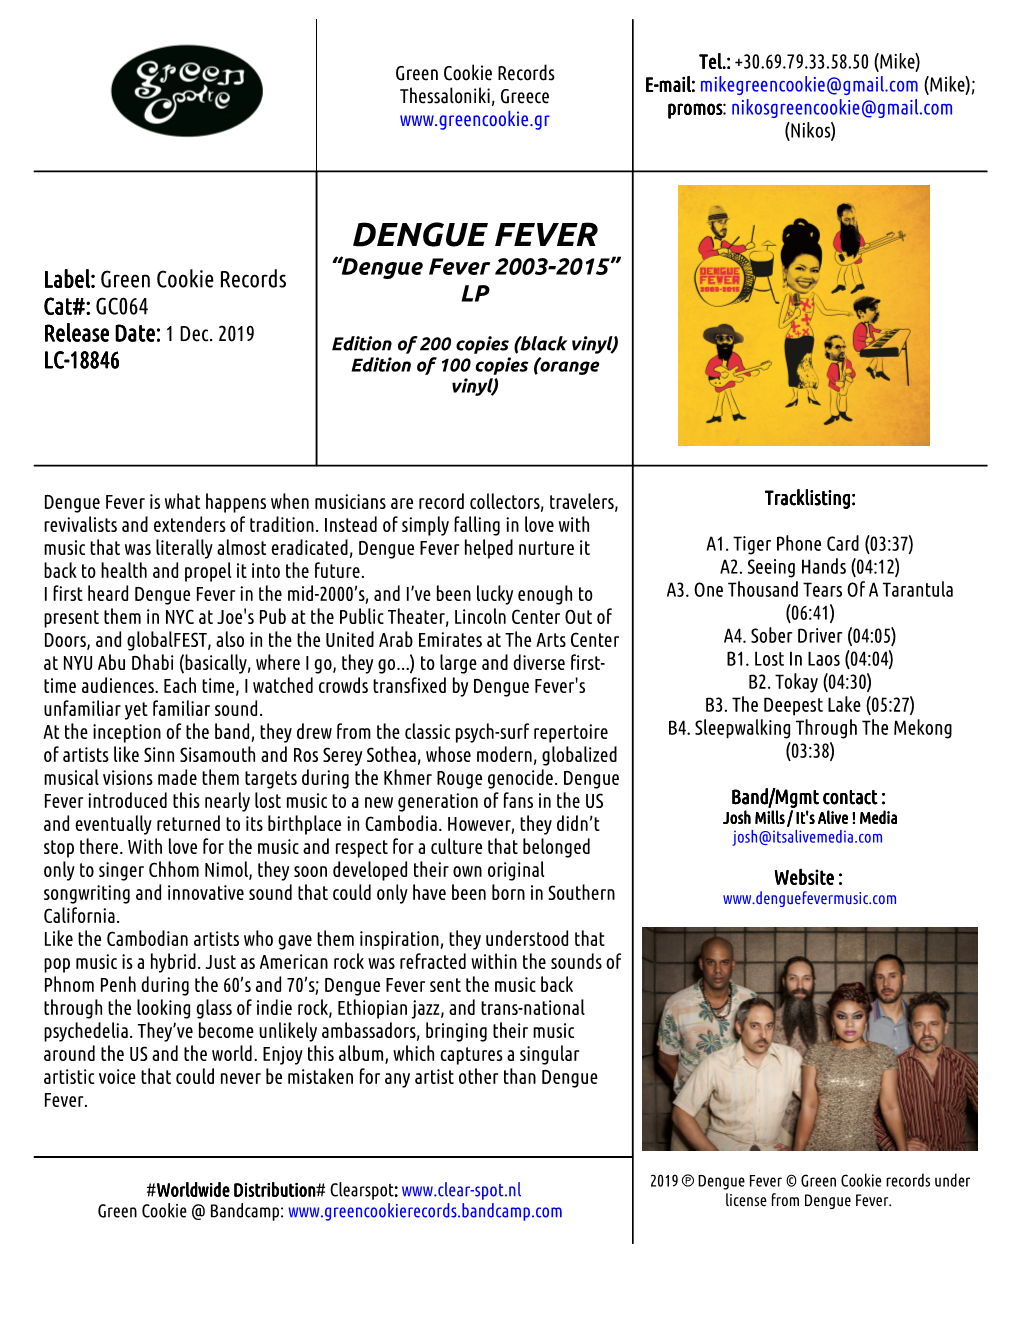 DENGUE FEVER “Dengue Fever 2003-2015” Label: Green Cookie Records LP Cat#: GC064 Release Date: 1 Dec